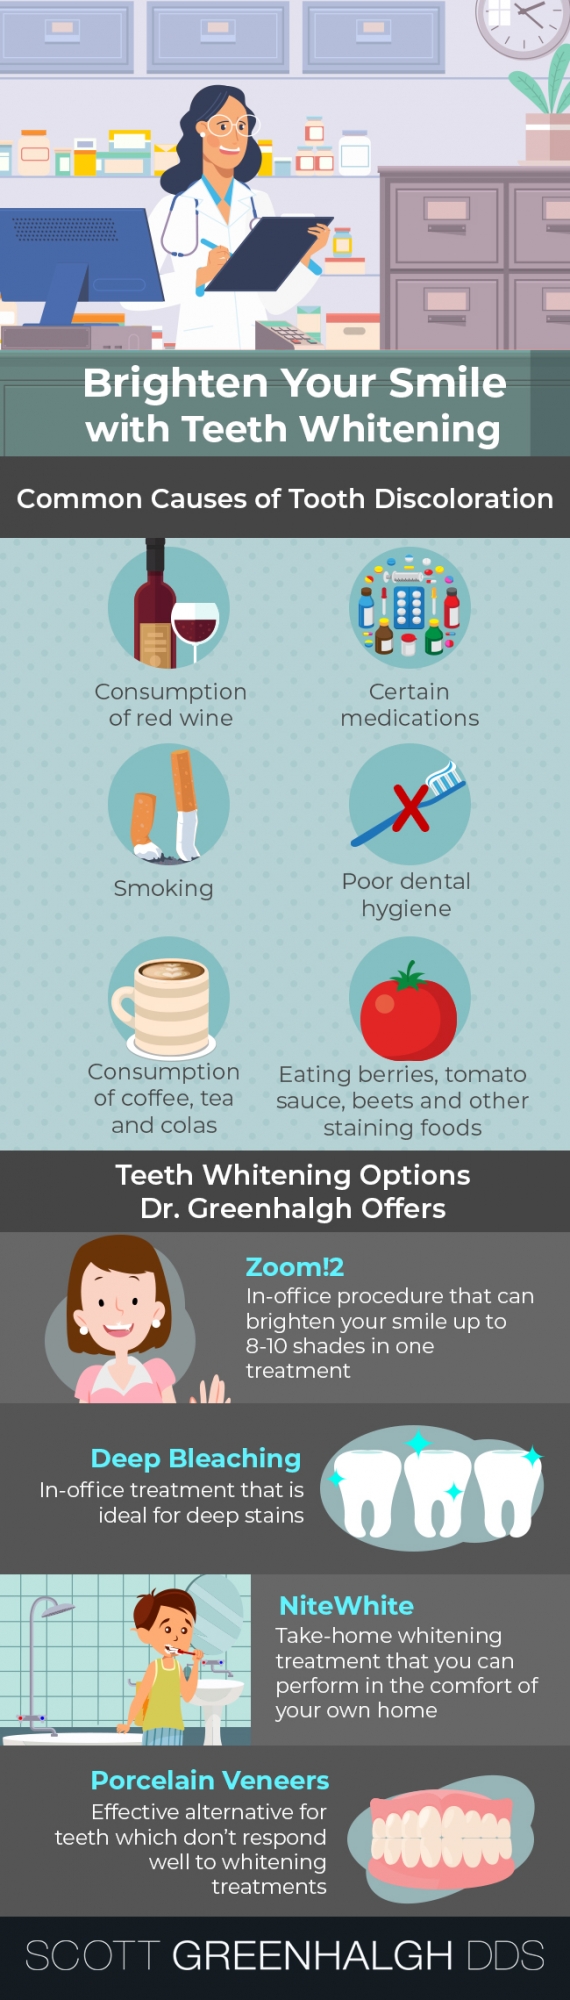 teeth whitening infographic - Lakewood cosmetic dentist